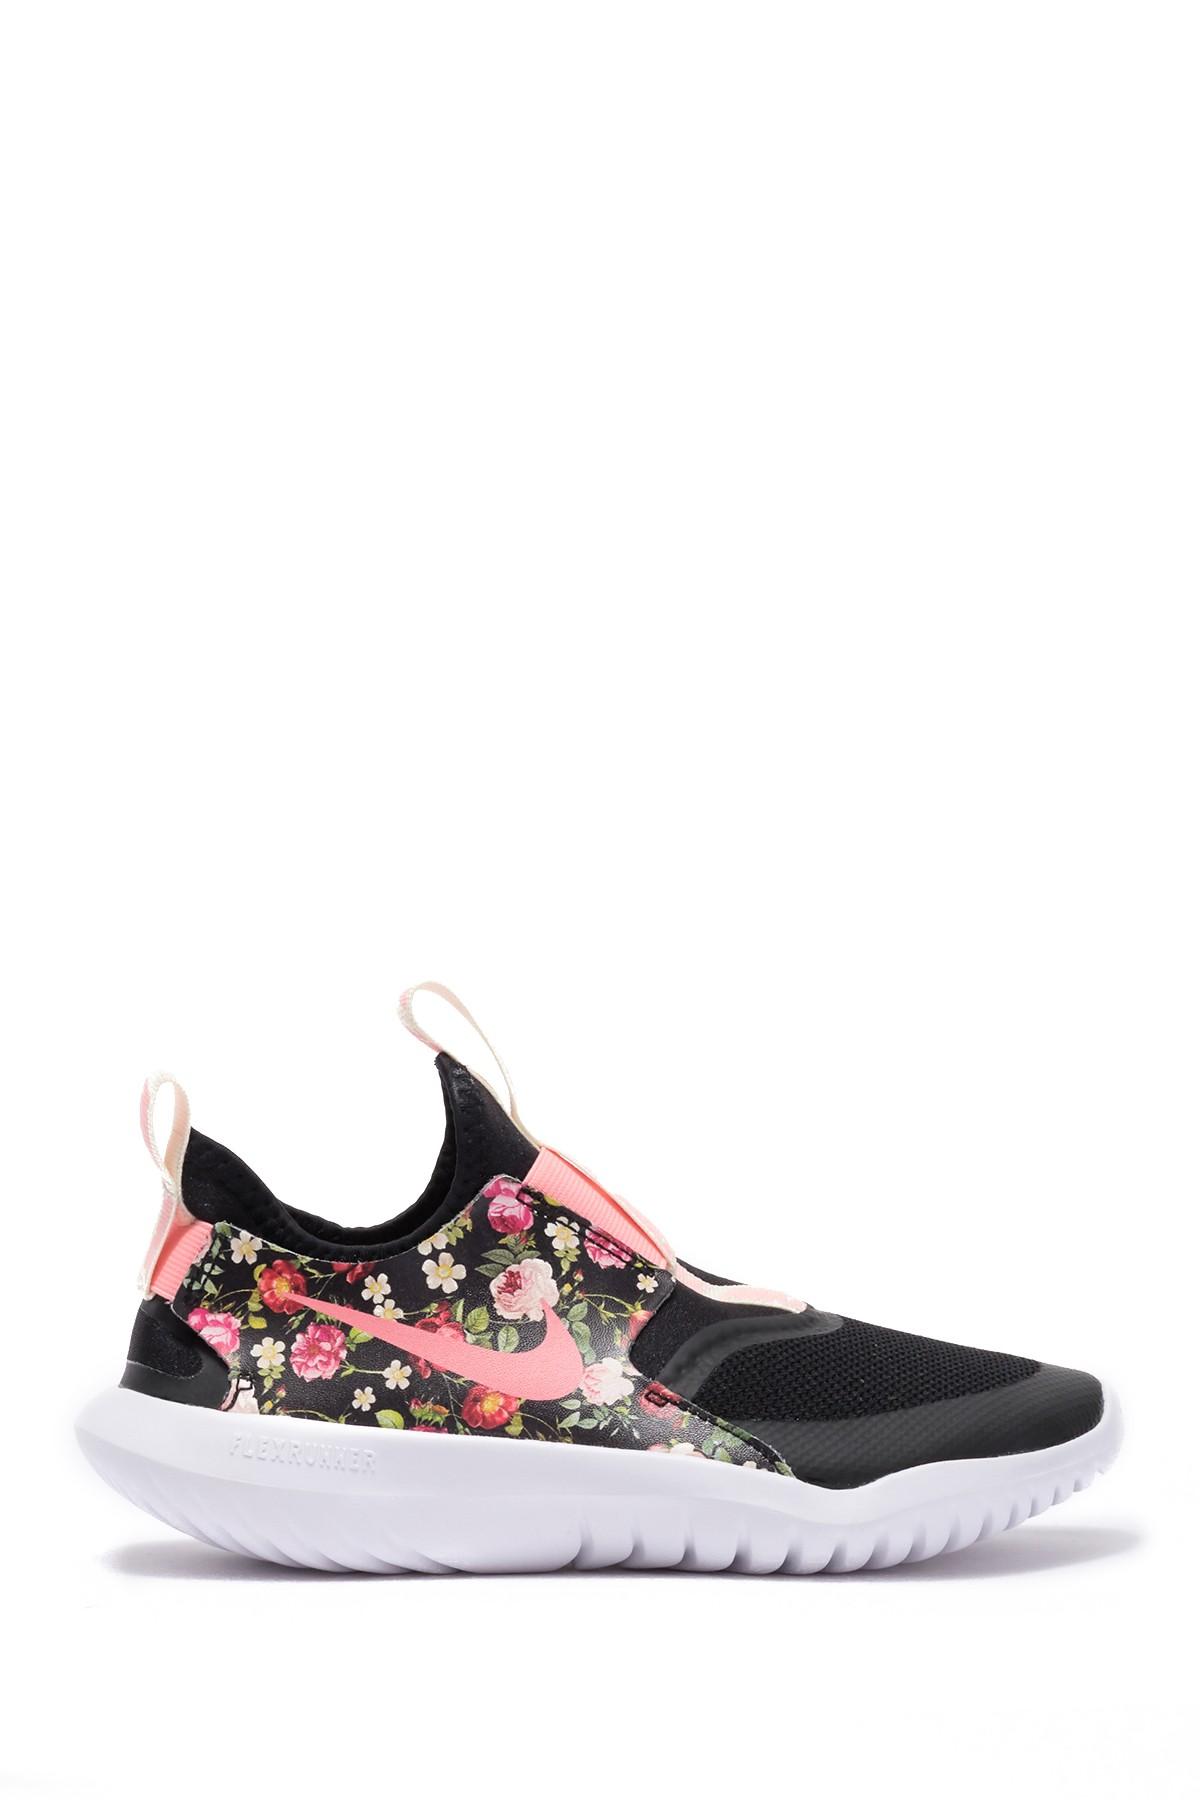 Nike Leather Flex Runner Vintage Floral Trail Running Shoes in Black | Lyst